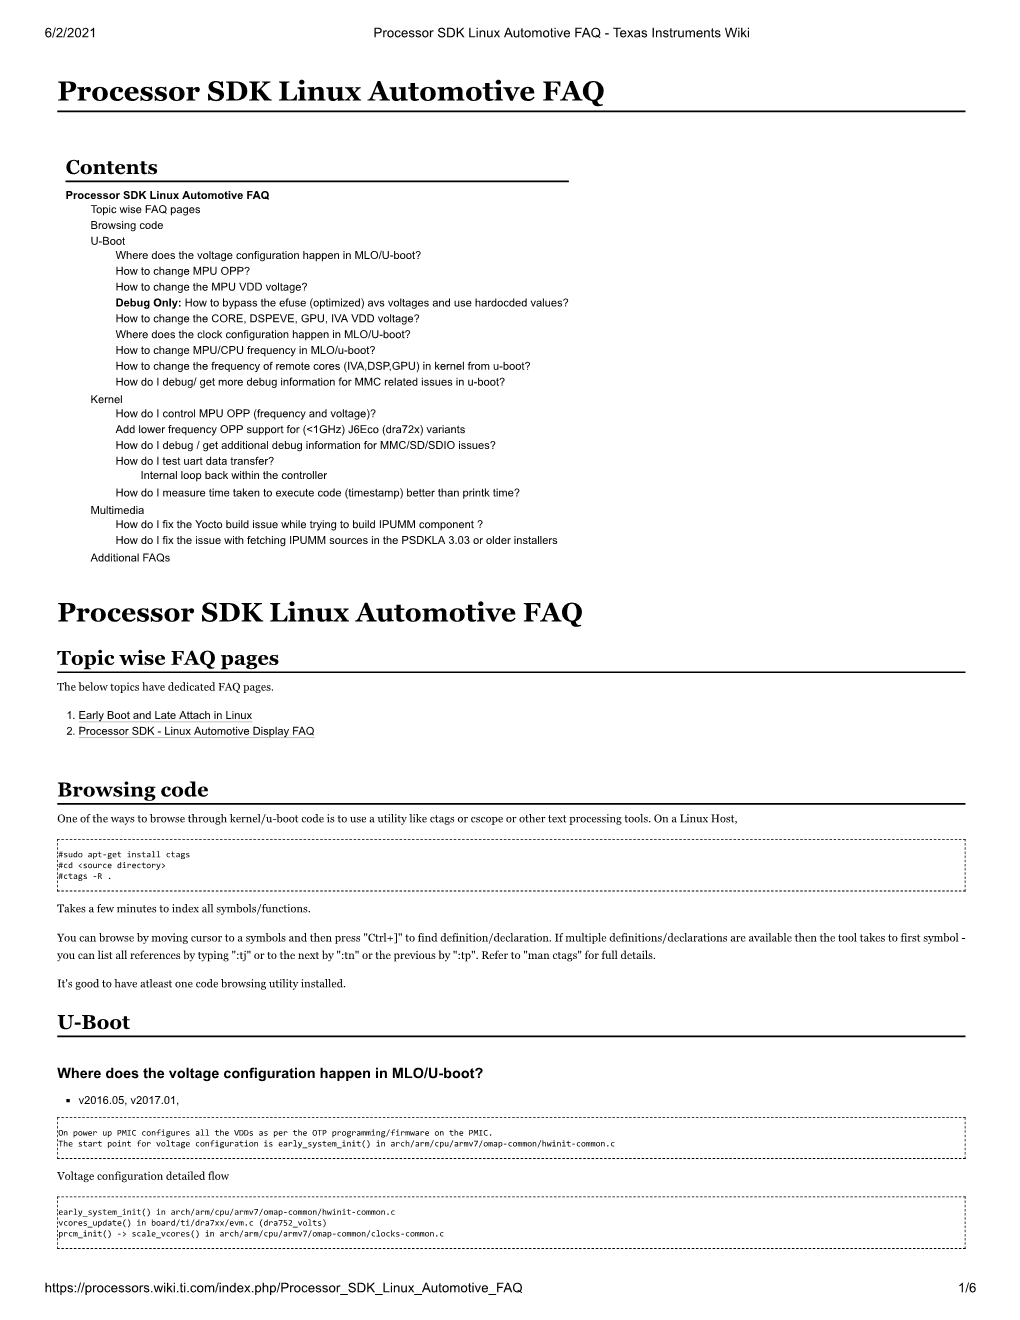 Processor SDK Linux Automotive FAQ - Texas Instruments Wiki